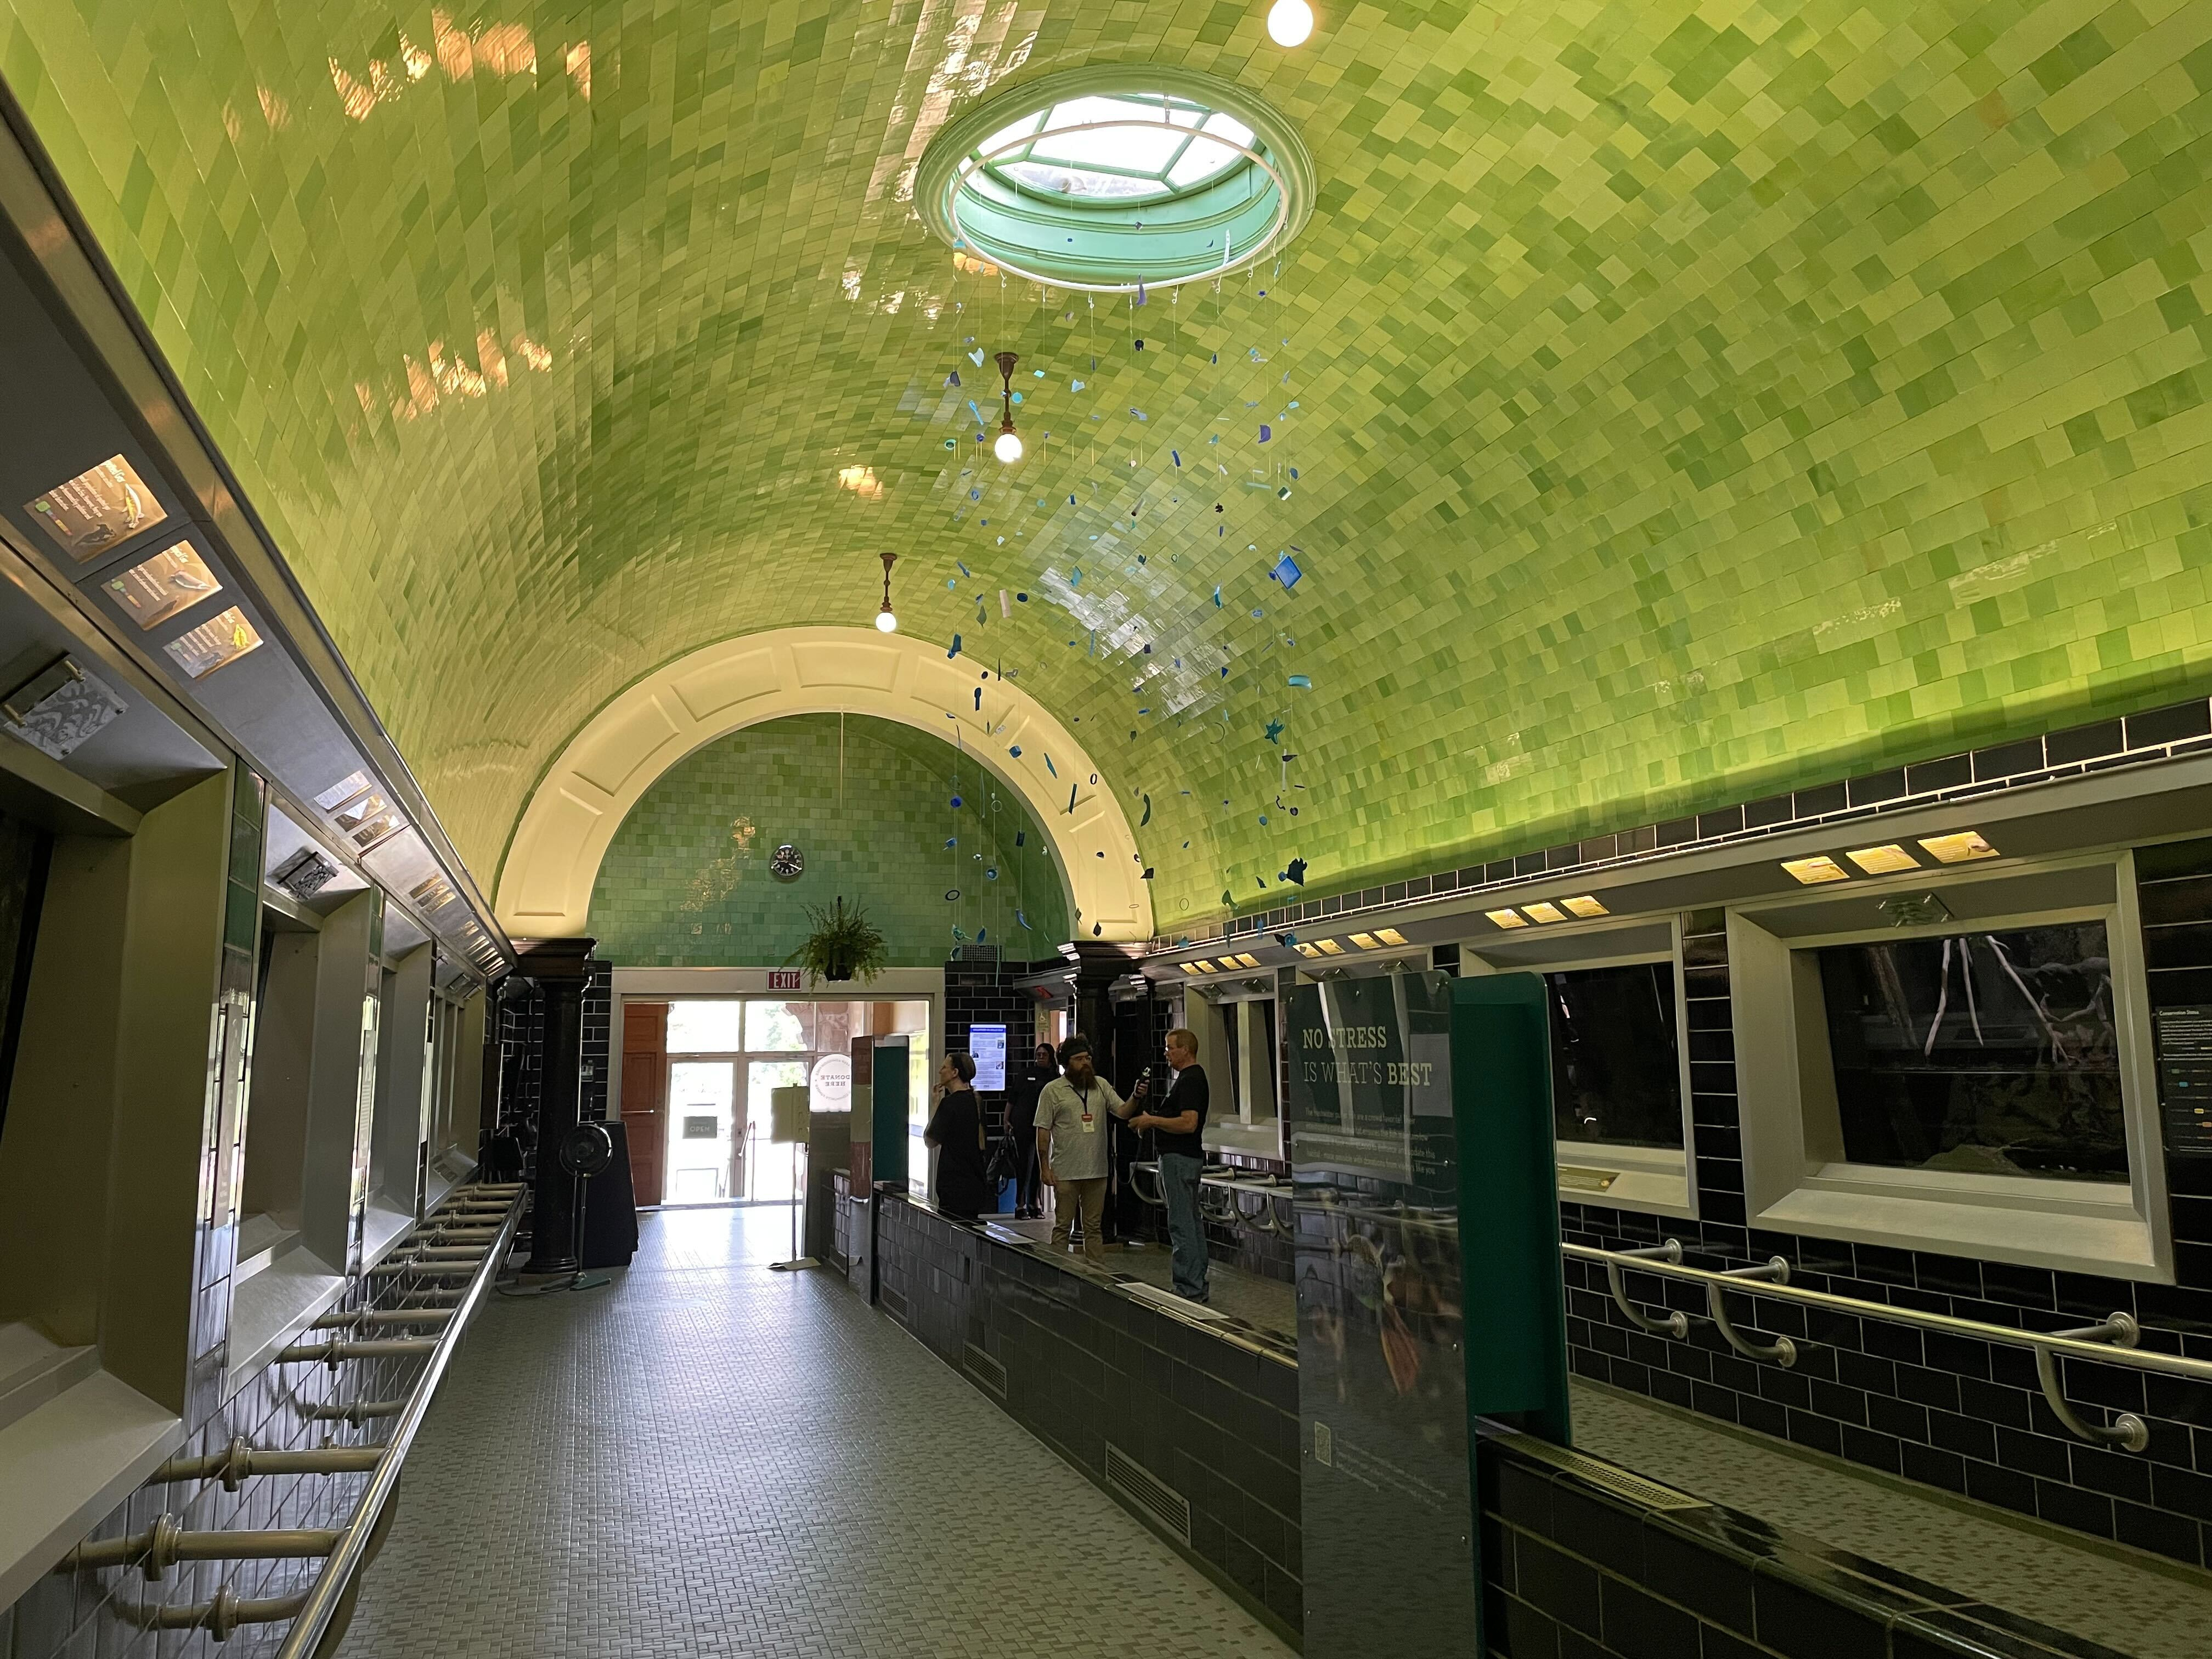 The secrets and treasures hidden inside the Belle Isle Aquarium — a true jewel of Detroit